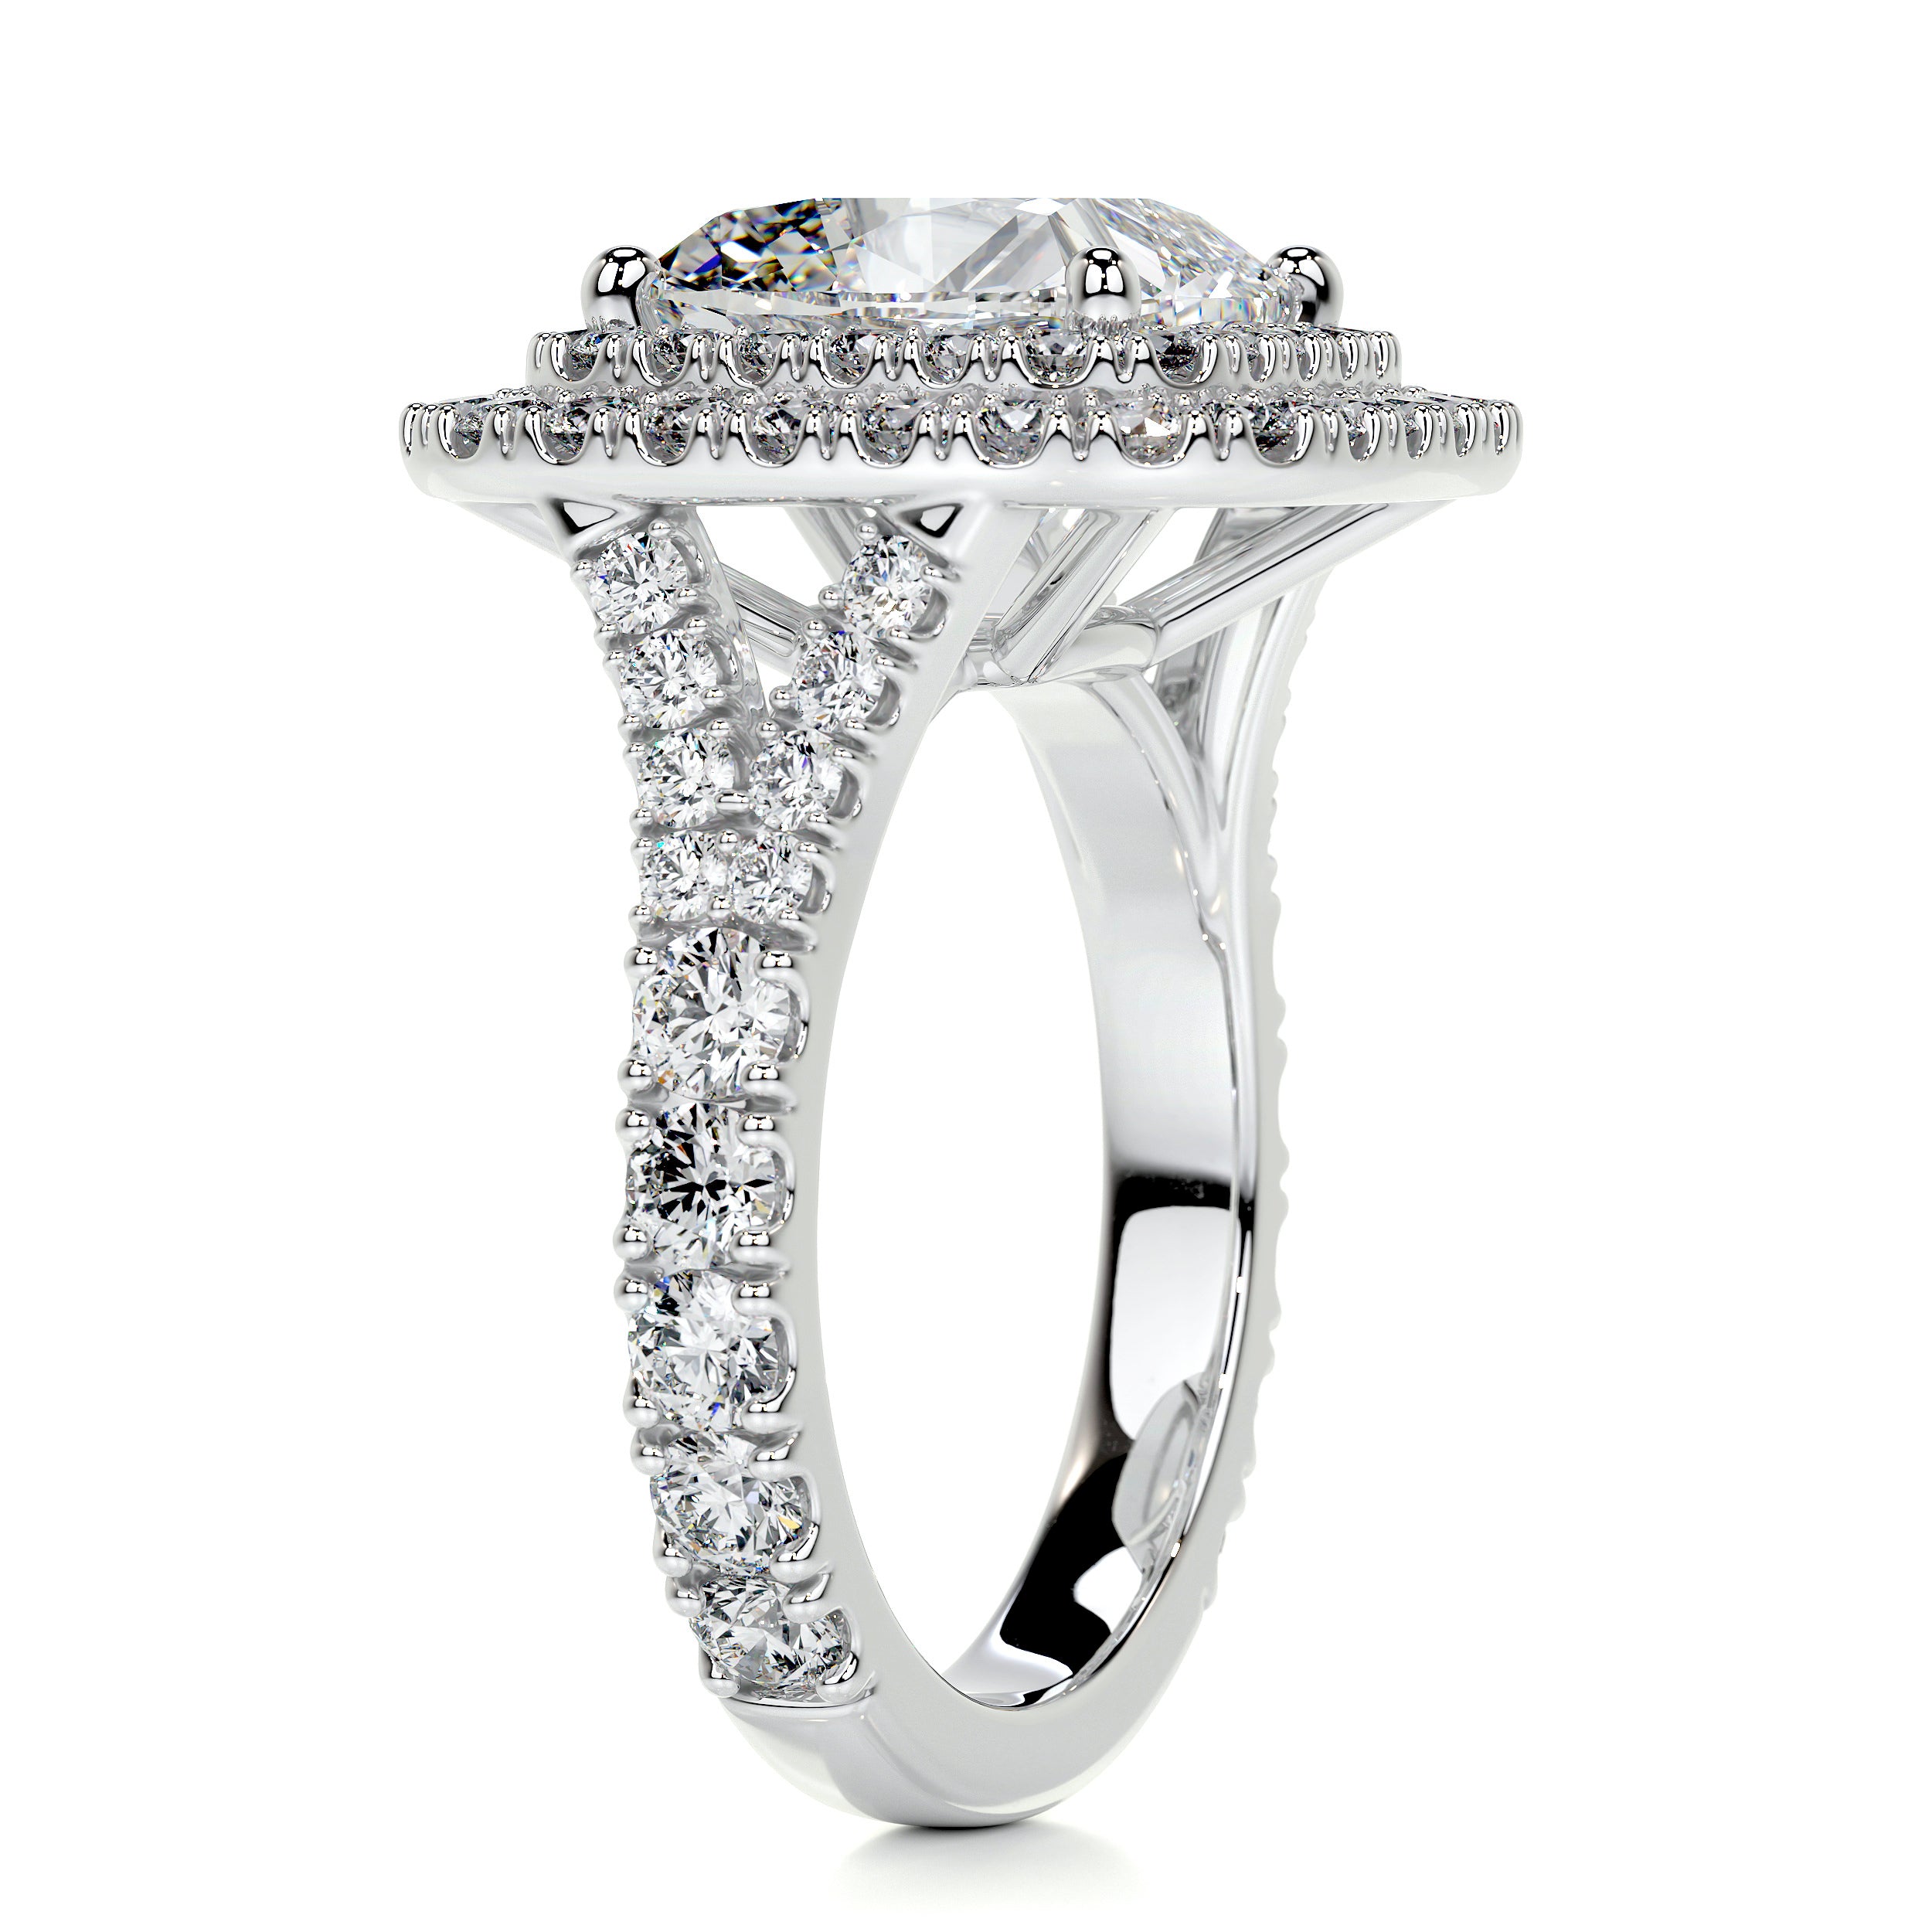 Marley Diamond Engagement Ring - 18K White Gold